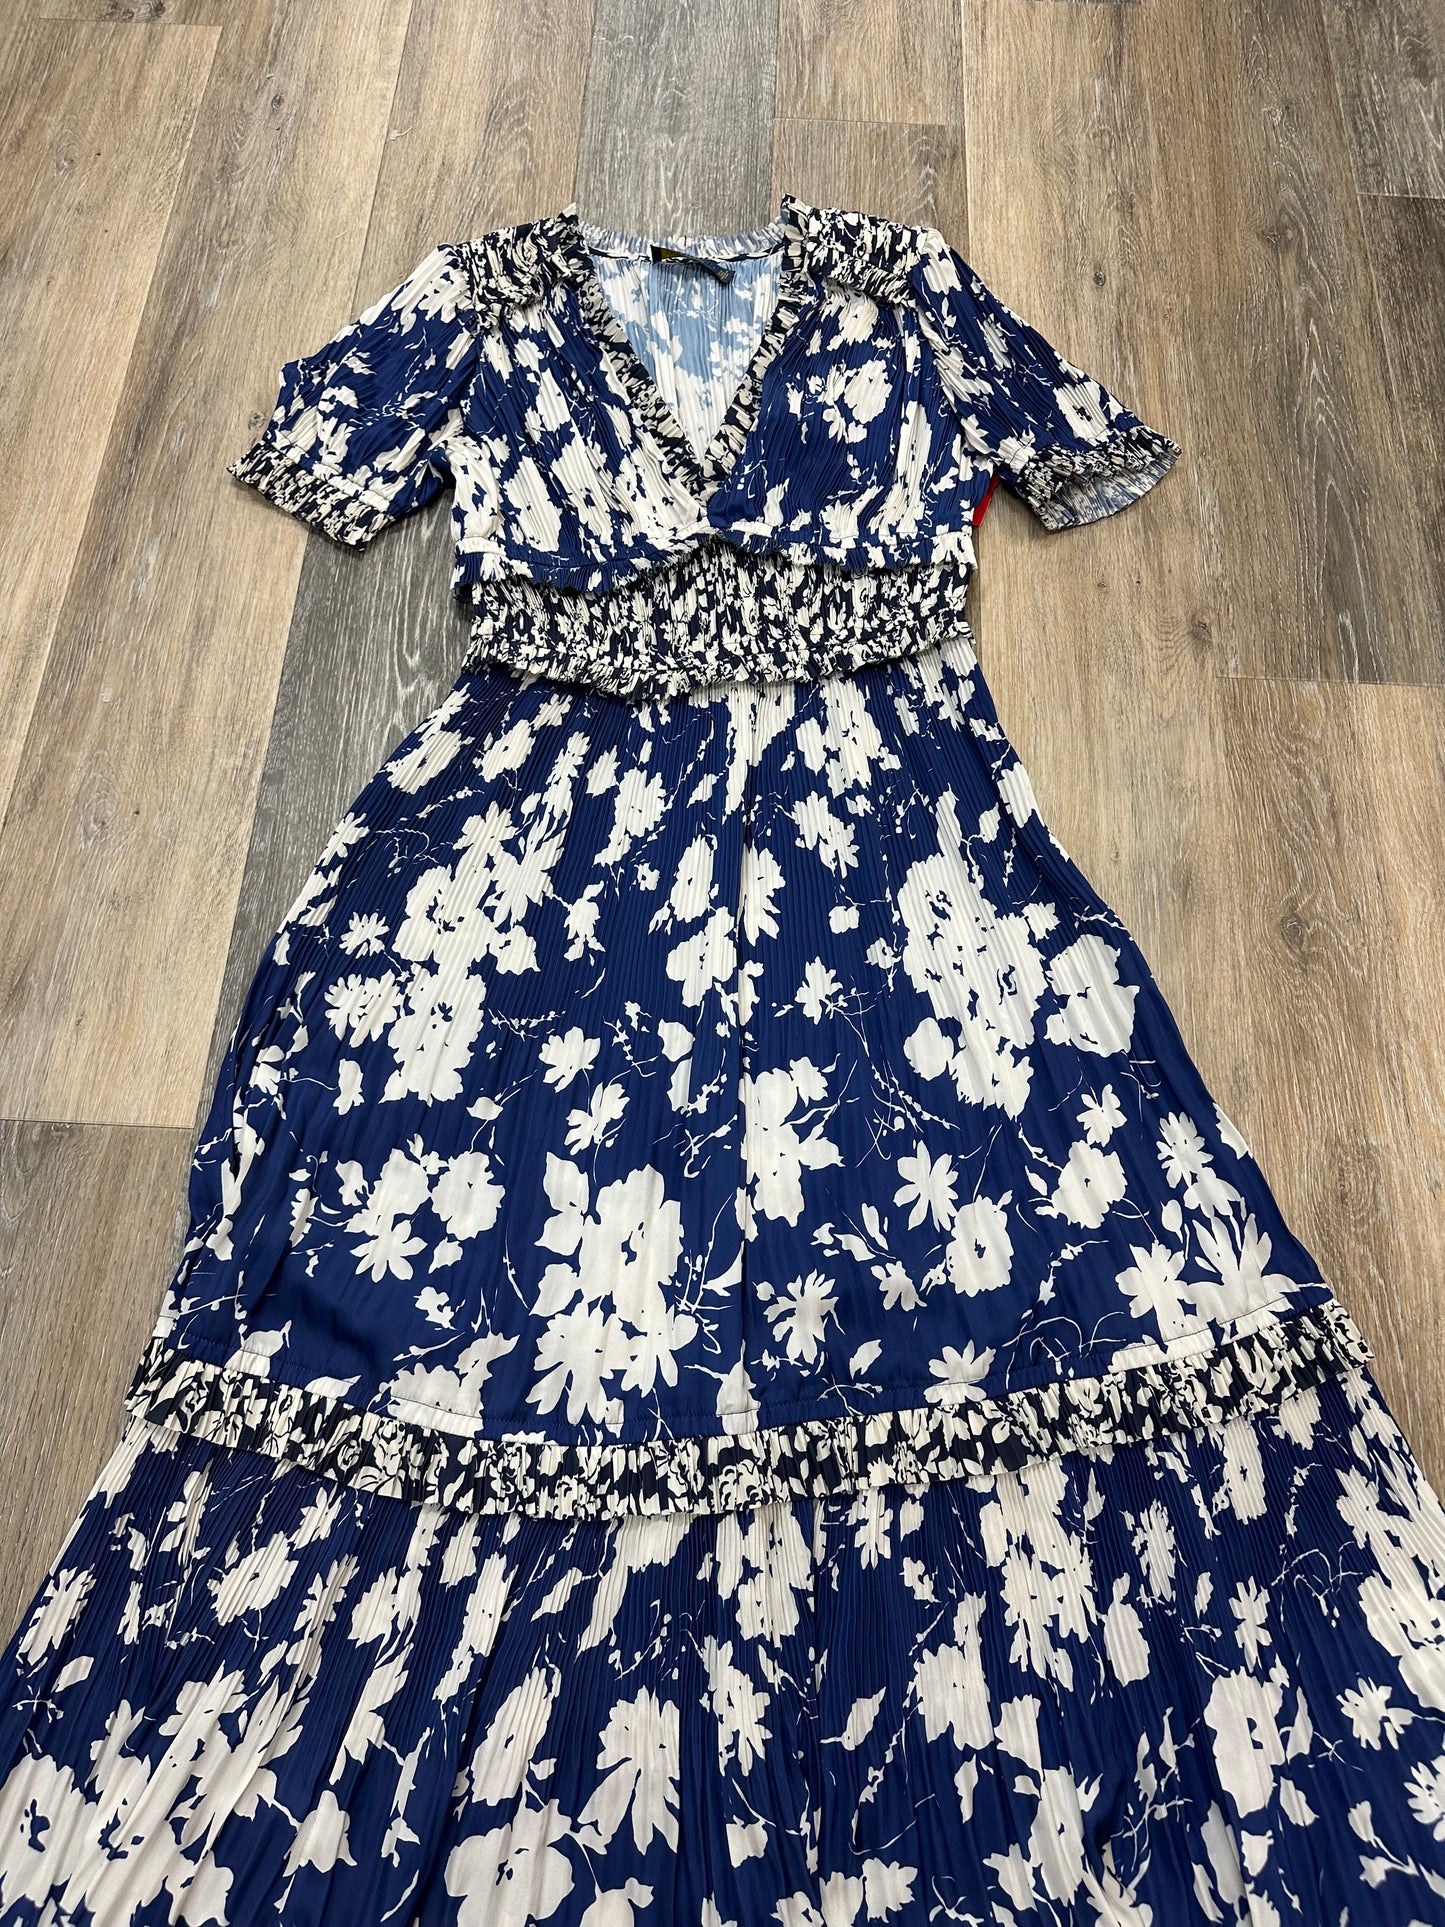 Blue Dress Designer Polo Ralph Lauren, Size 2